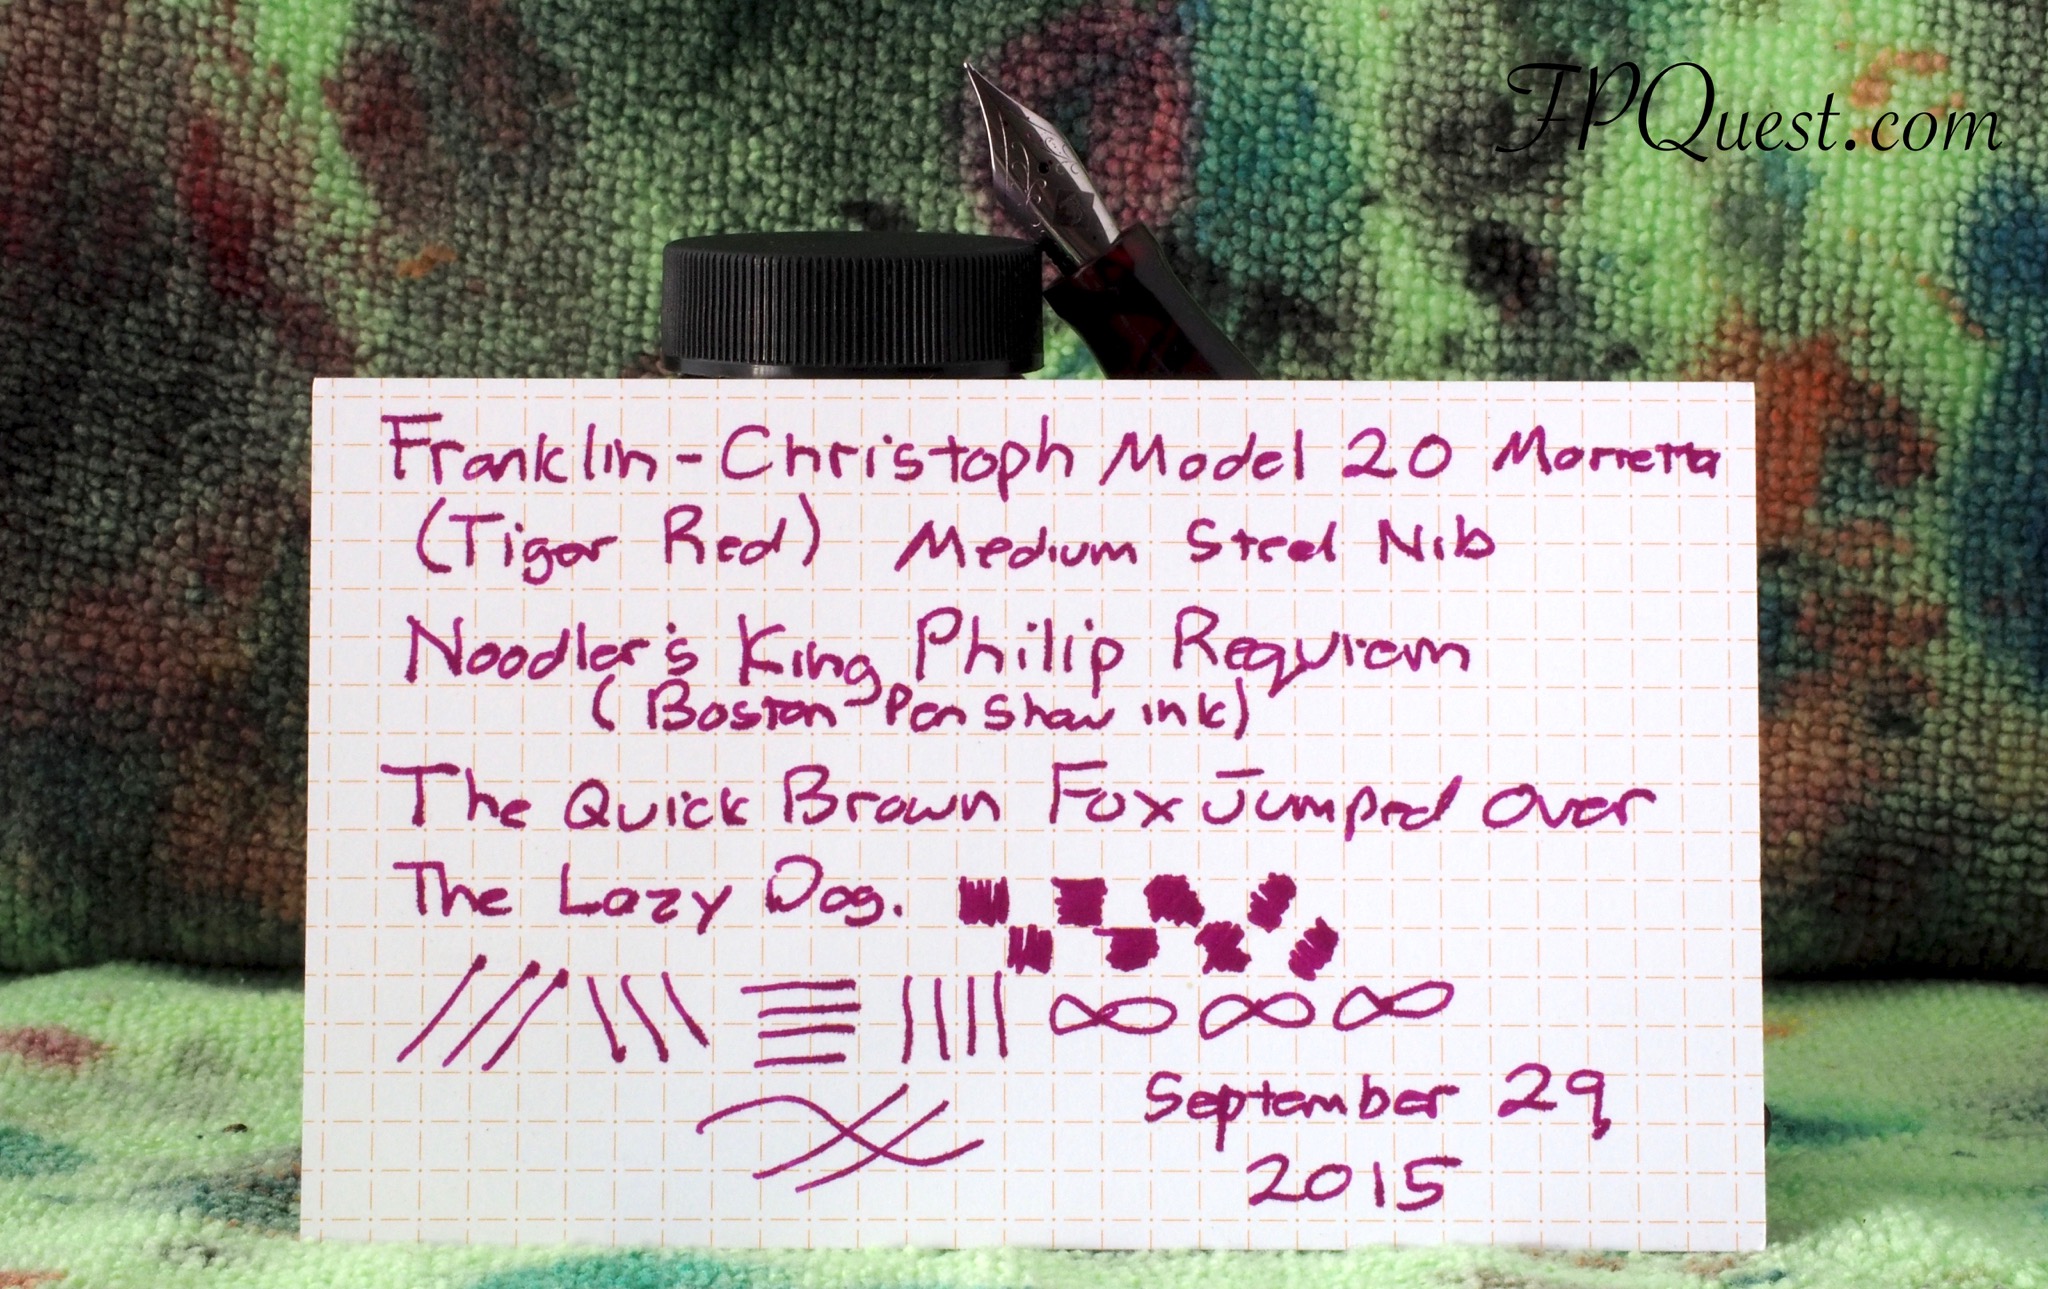 Franklin-Christoph Model 20 with Noodler's King Philip Requeim writing sample